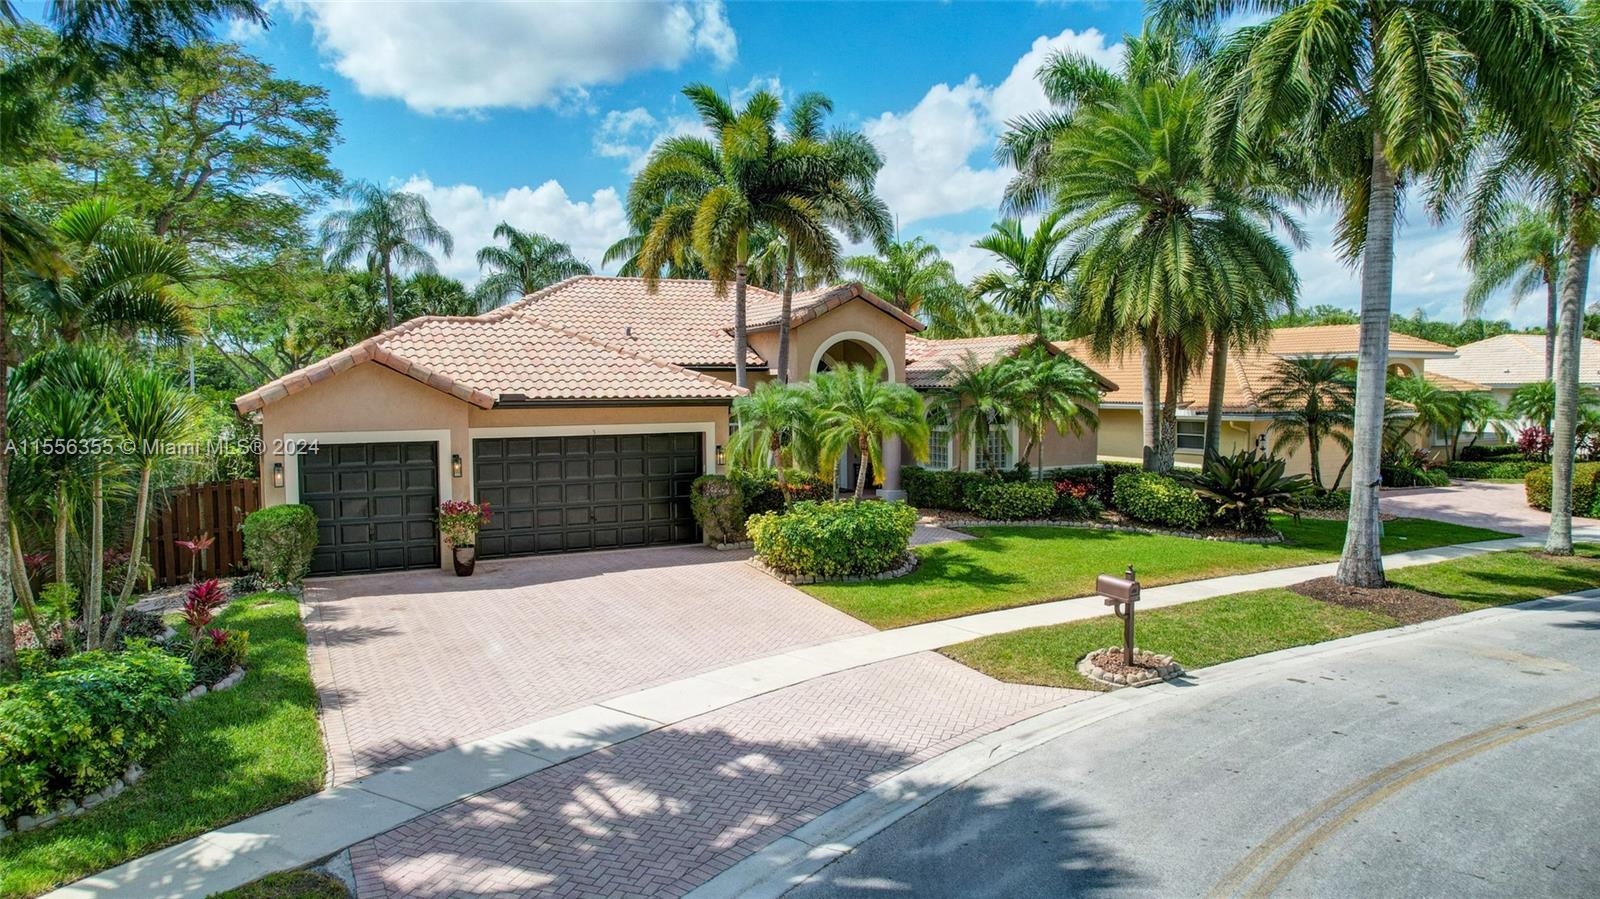 Property for Sale at 5 Nw 108th Way Way, Plantation, Miami-Dade County, Florida - Bedrooms: 4 
Bathrooms: 3  - $999,000